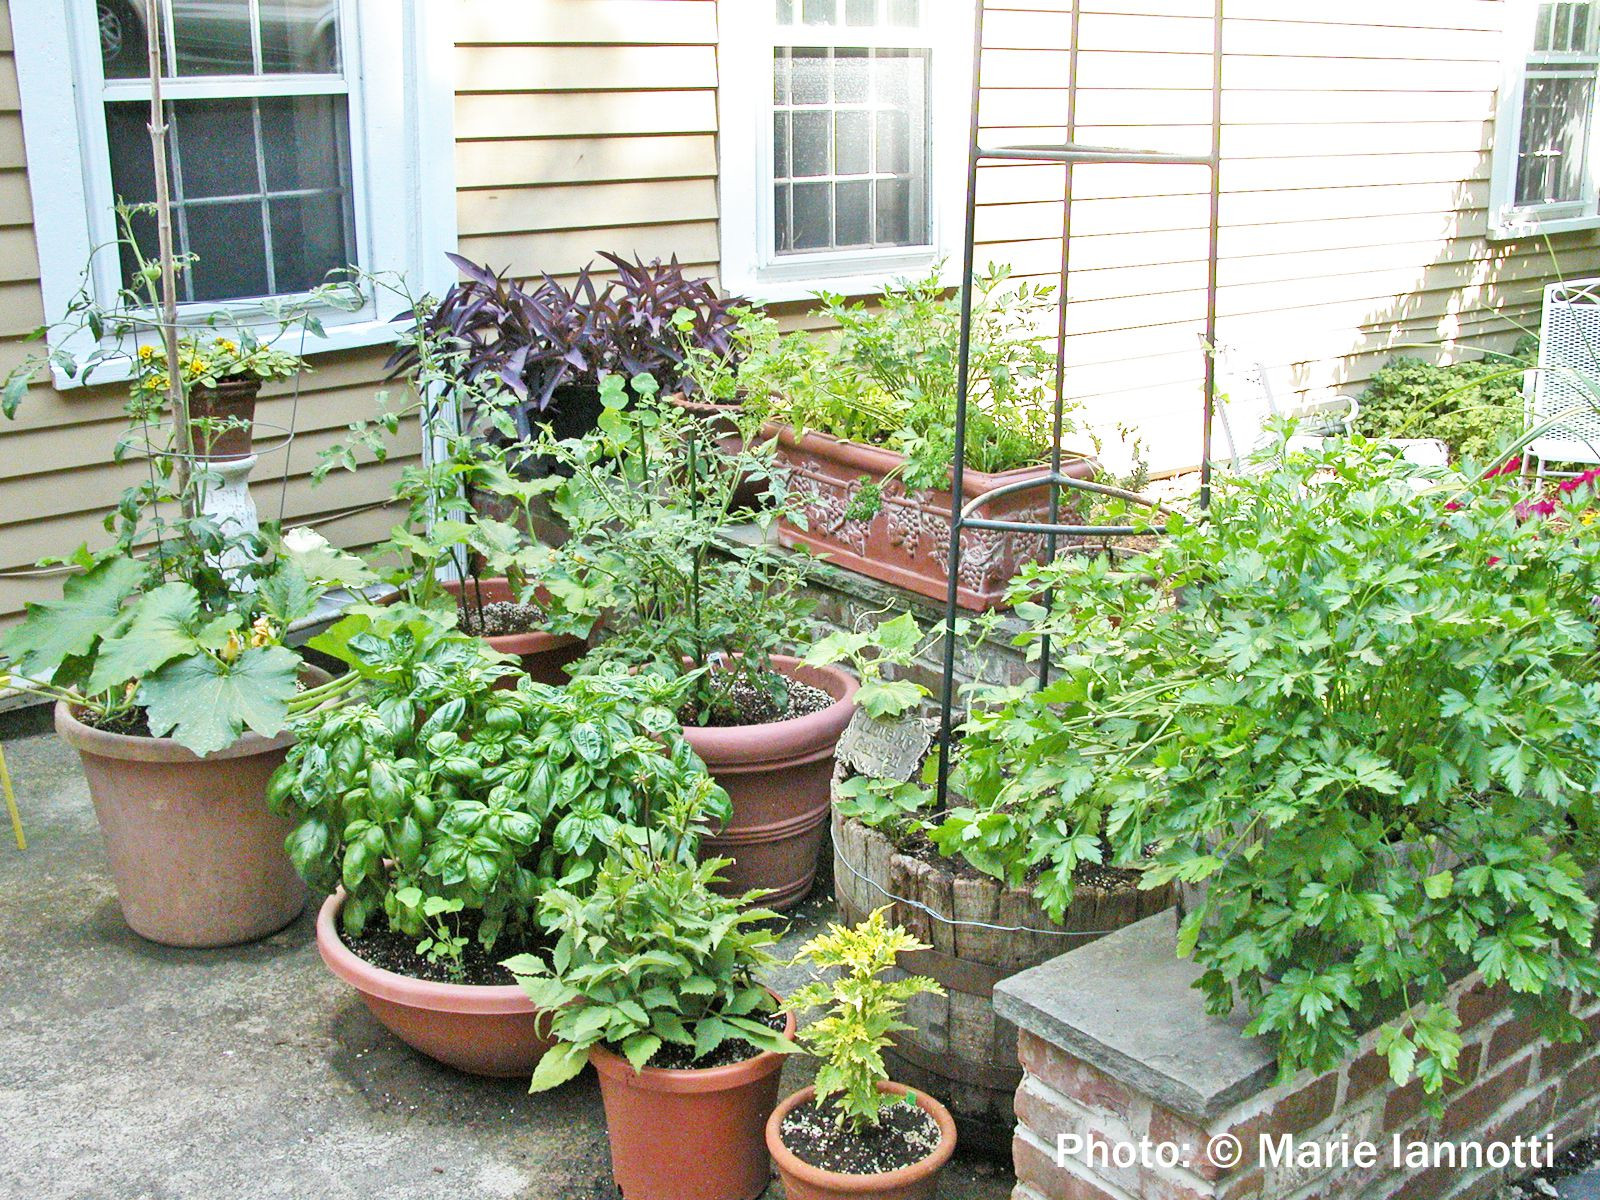 Best ideas about Container Vegetable Garden Ideas
. Save or Pin Container Ve able Gardening Now.